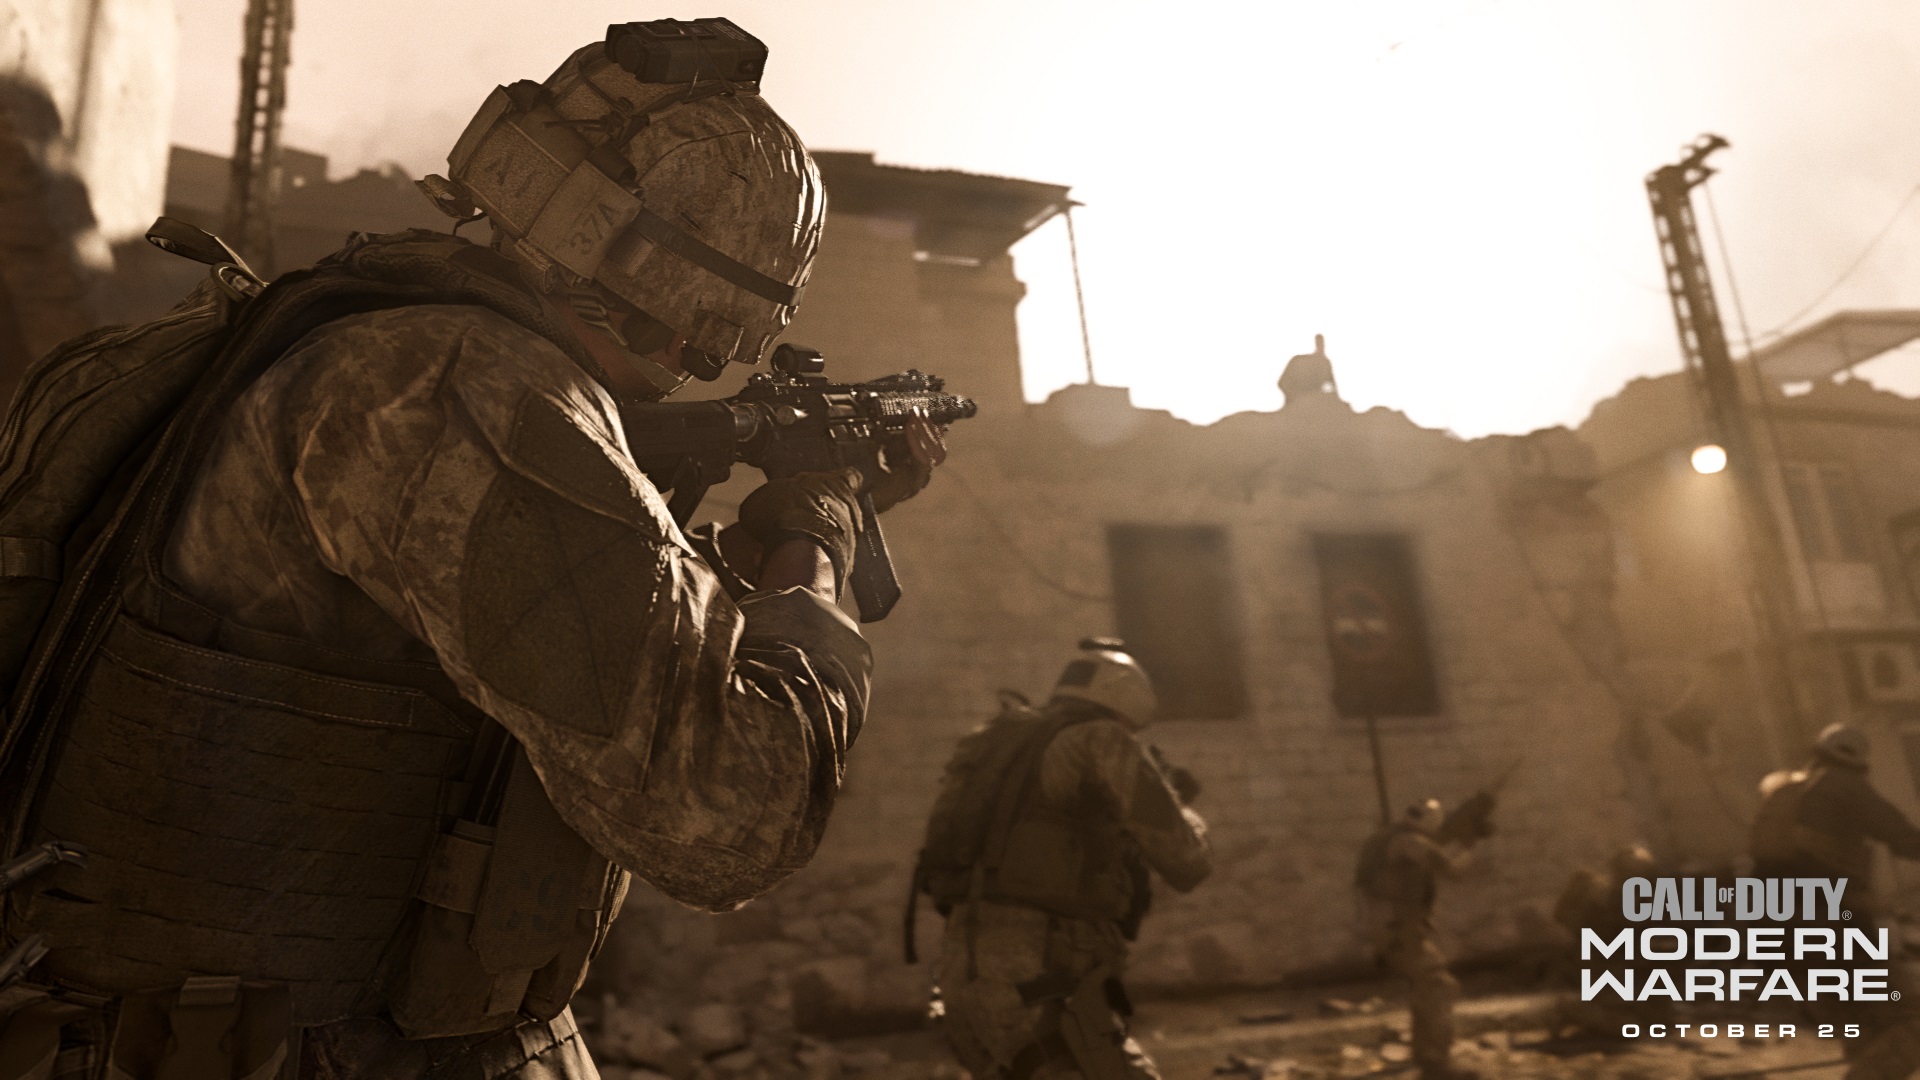 Free Internet Calls USA: “Call of Duty: Modern Warfare ... - 